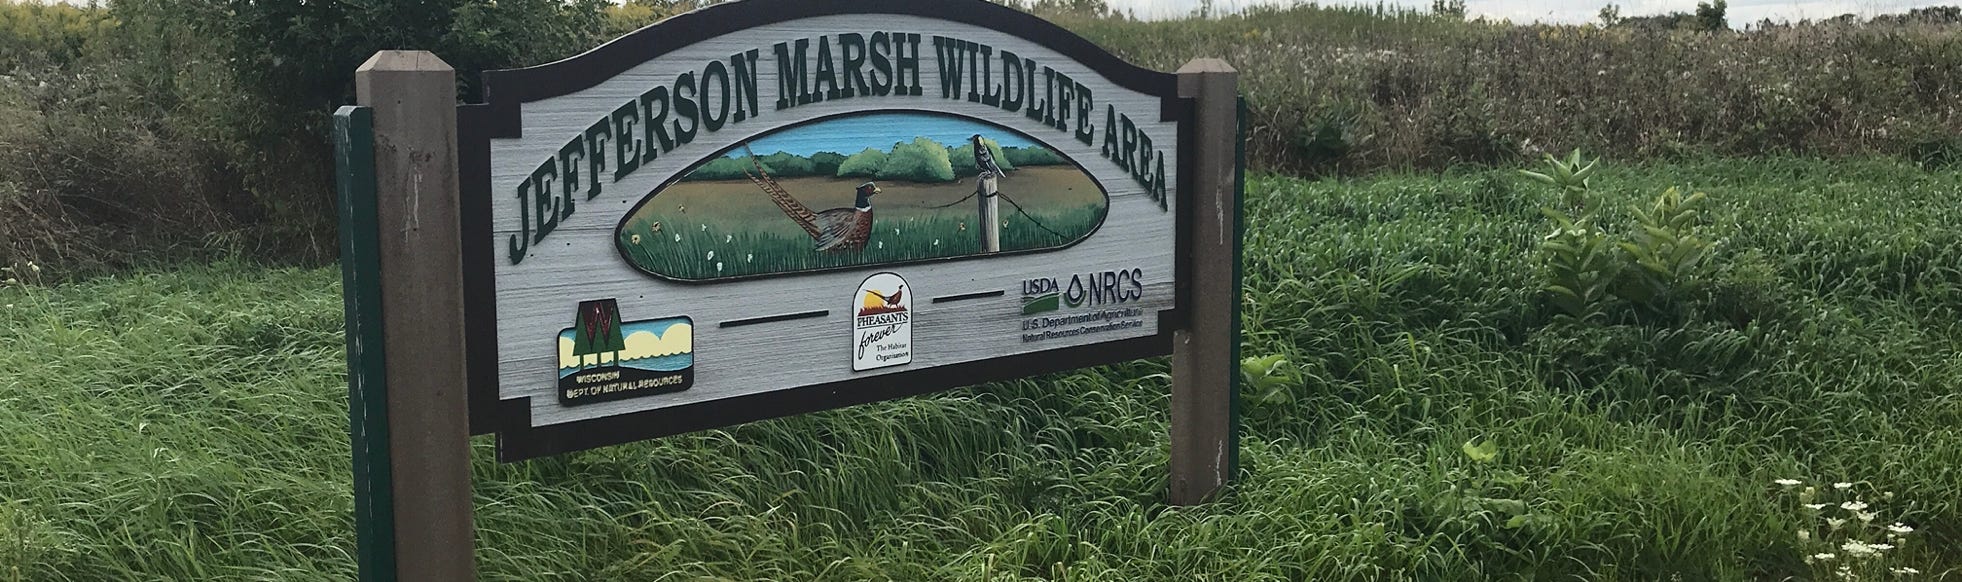 Jefferson Marsh Wildlife Area Wisconsin